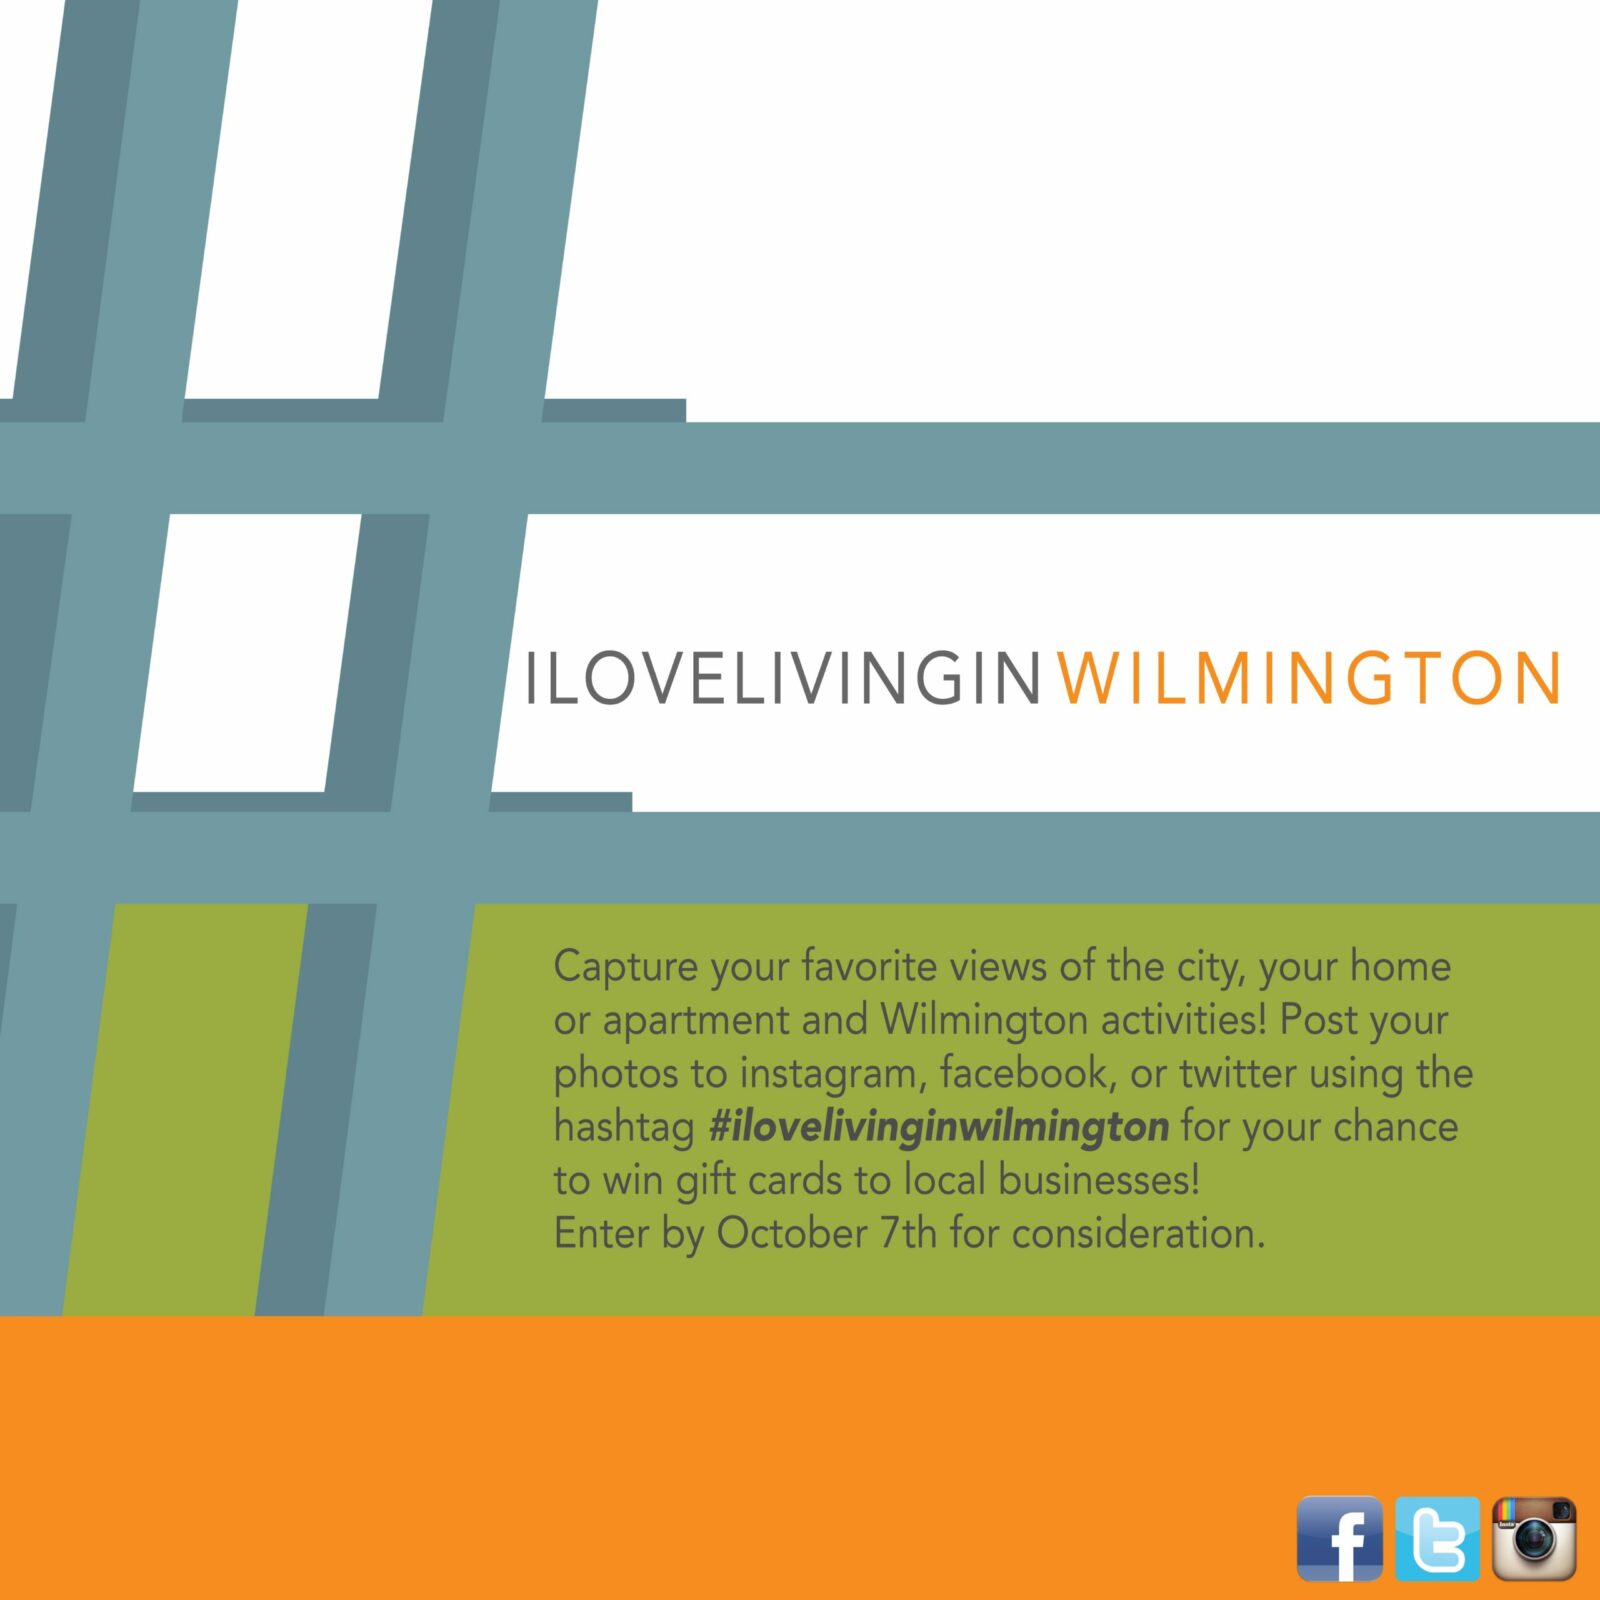 Introducing the #ILoveLivingINWilmington Hash Tag Contest!